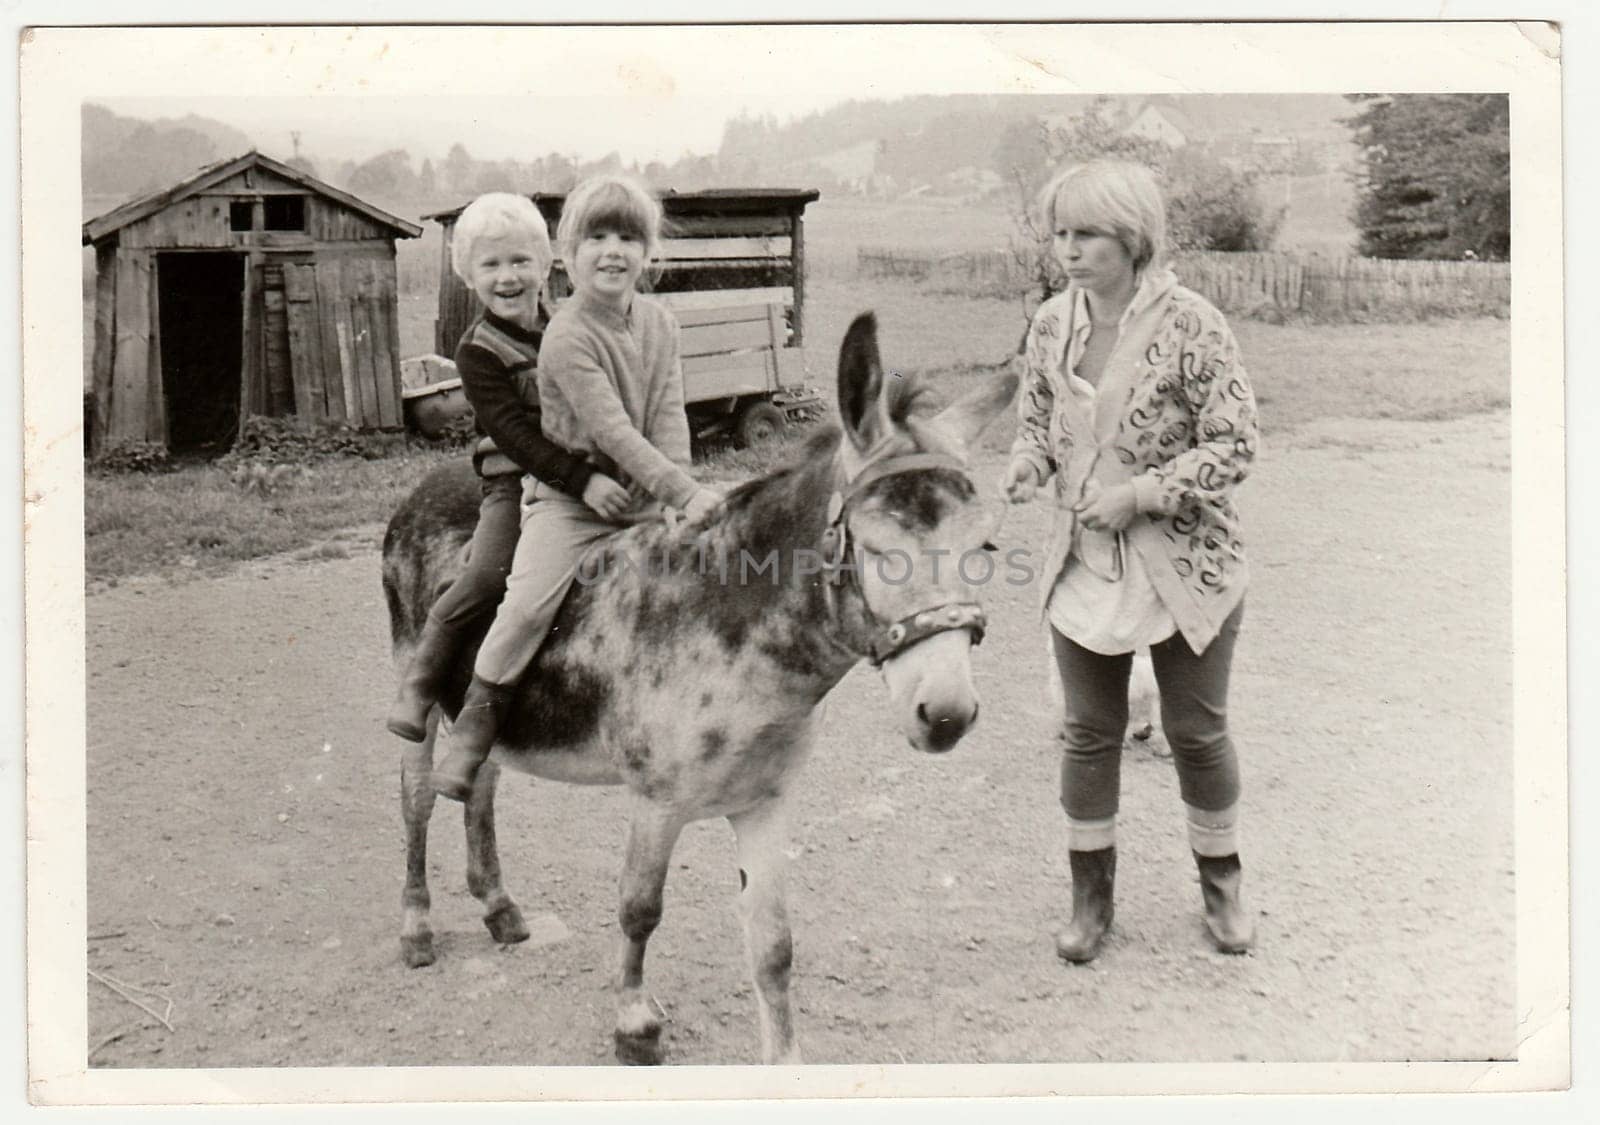 THE CZECHOSLOVAK SOCIALIST REPUBLIC - CIRCA 1970s: Retro photo shows children who sit on donkey. Black and white vintage photography.